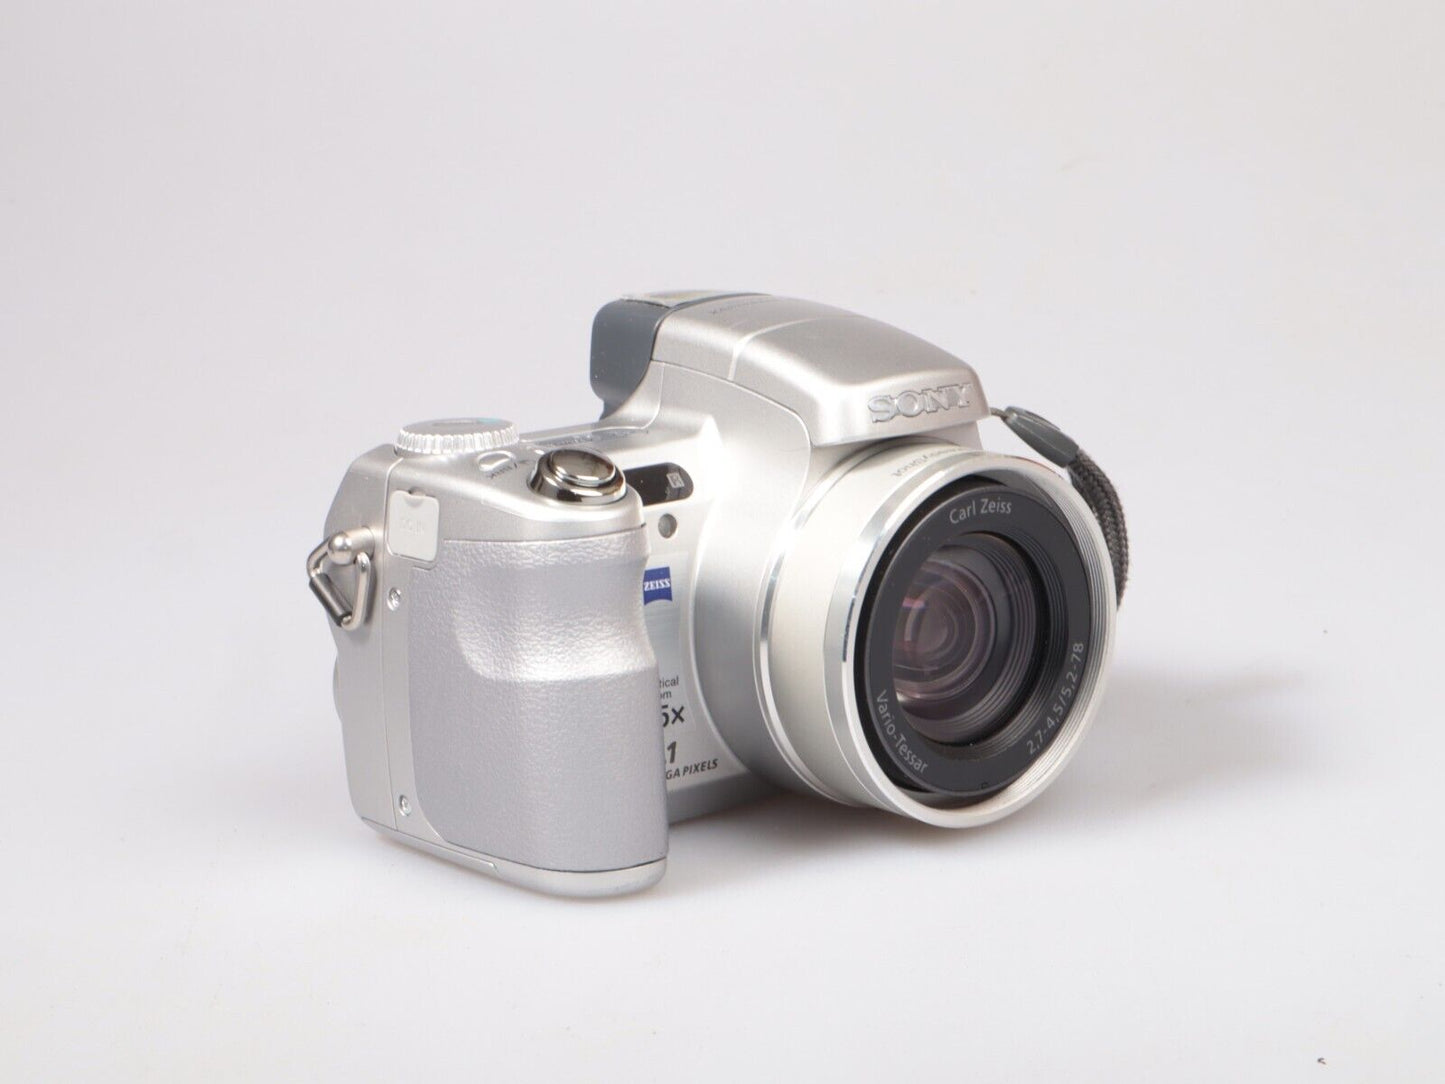 SONY CyberShot DSC-H9 | Digital Bridge Camera | 8.1 MP | Silver